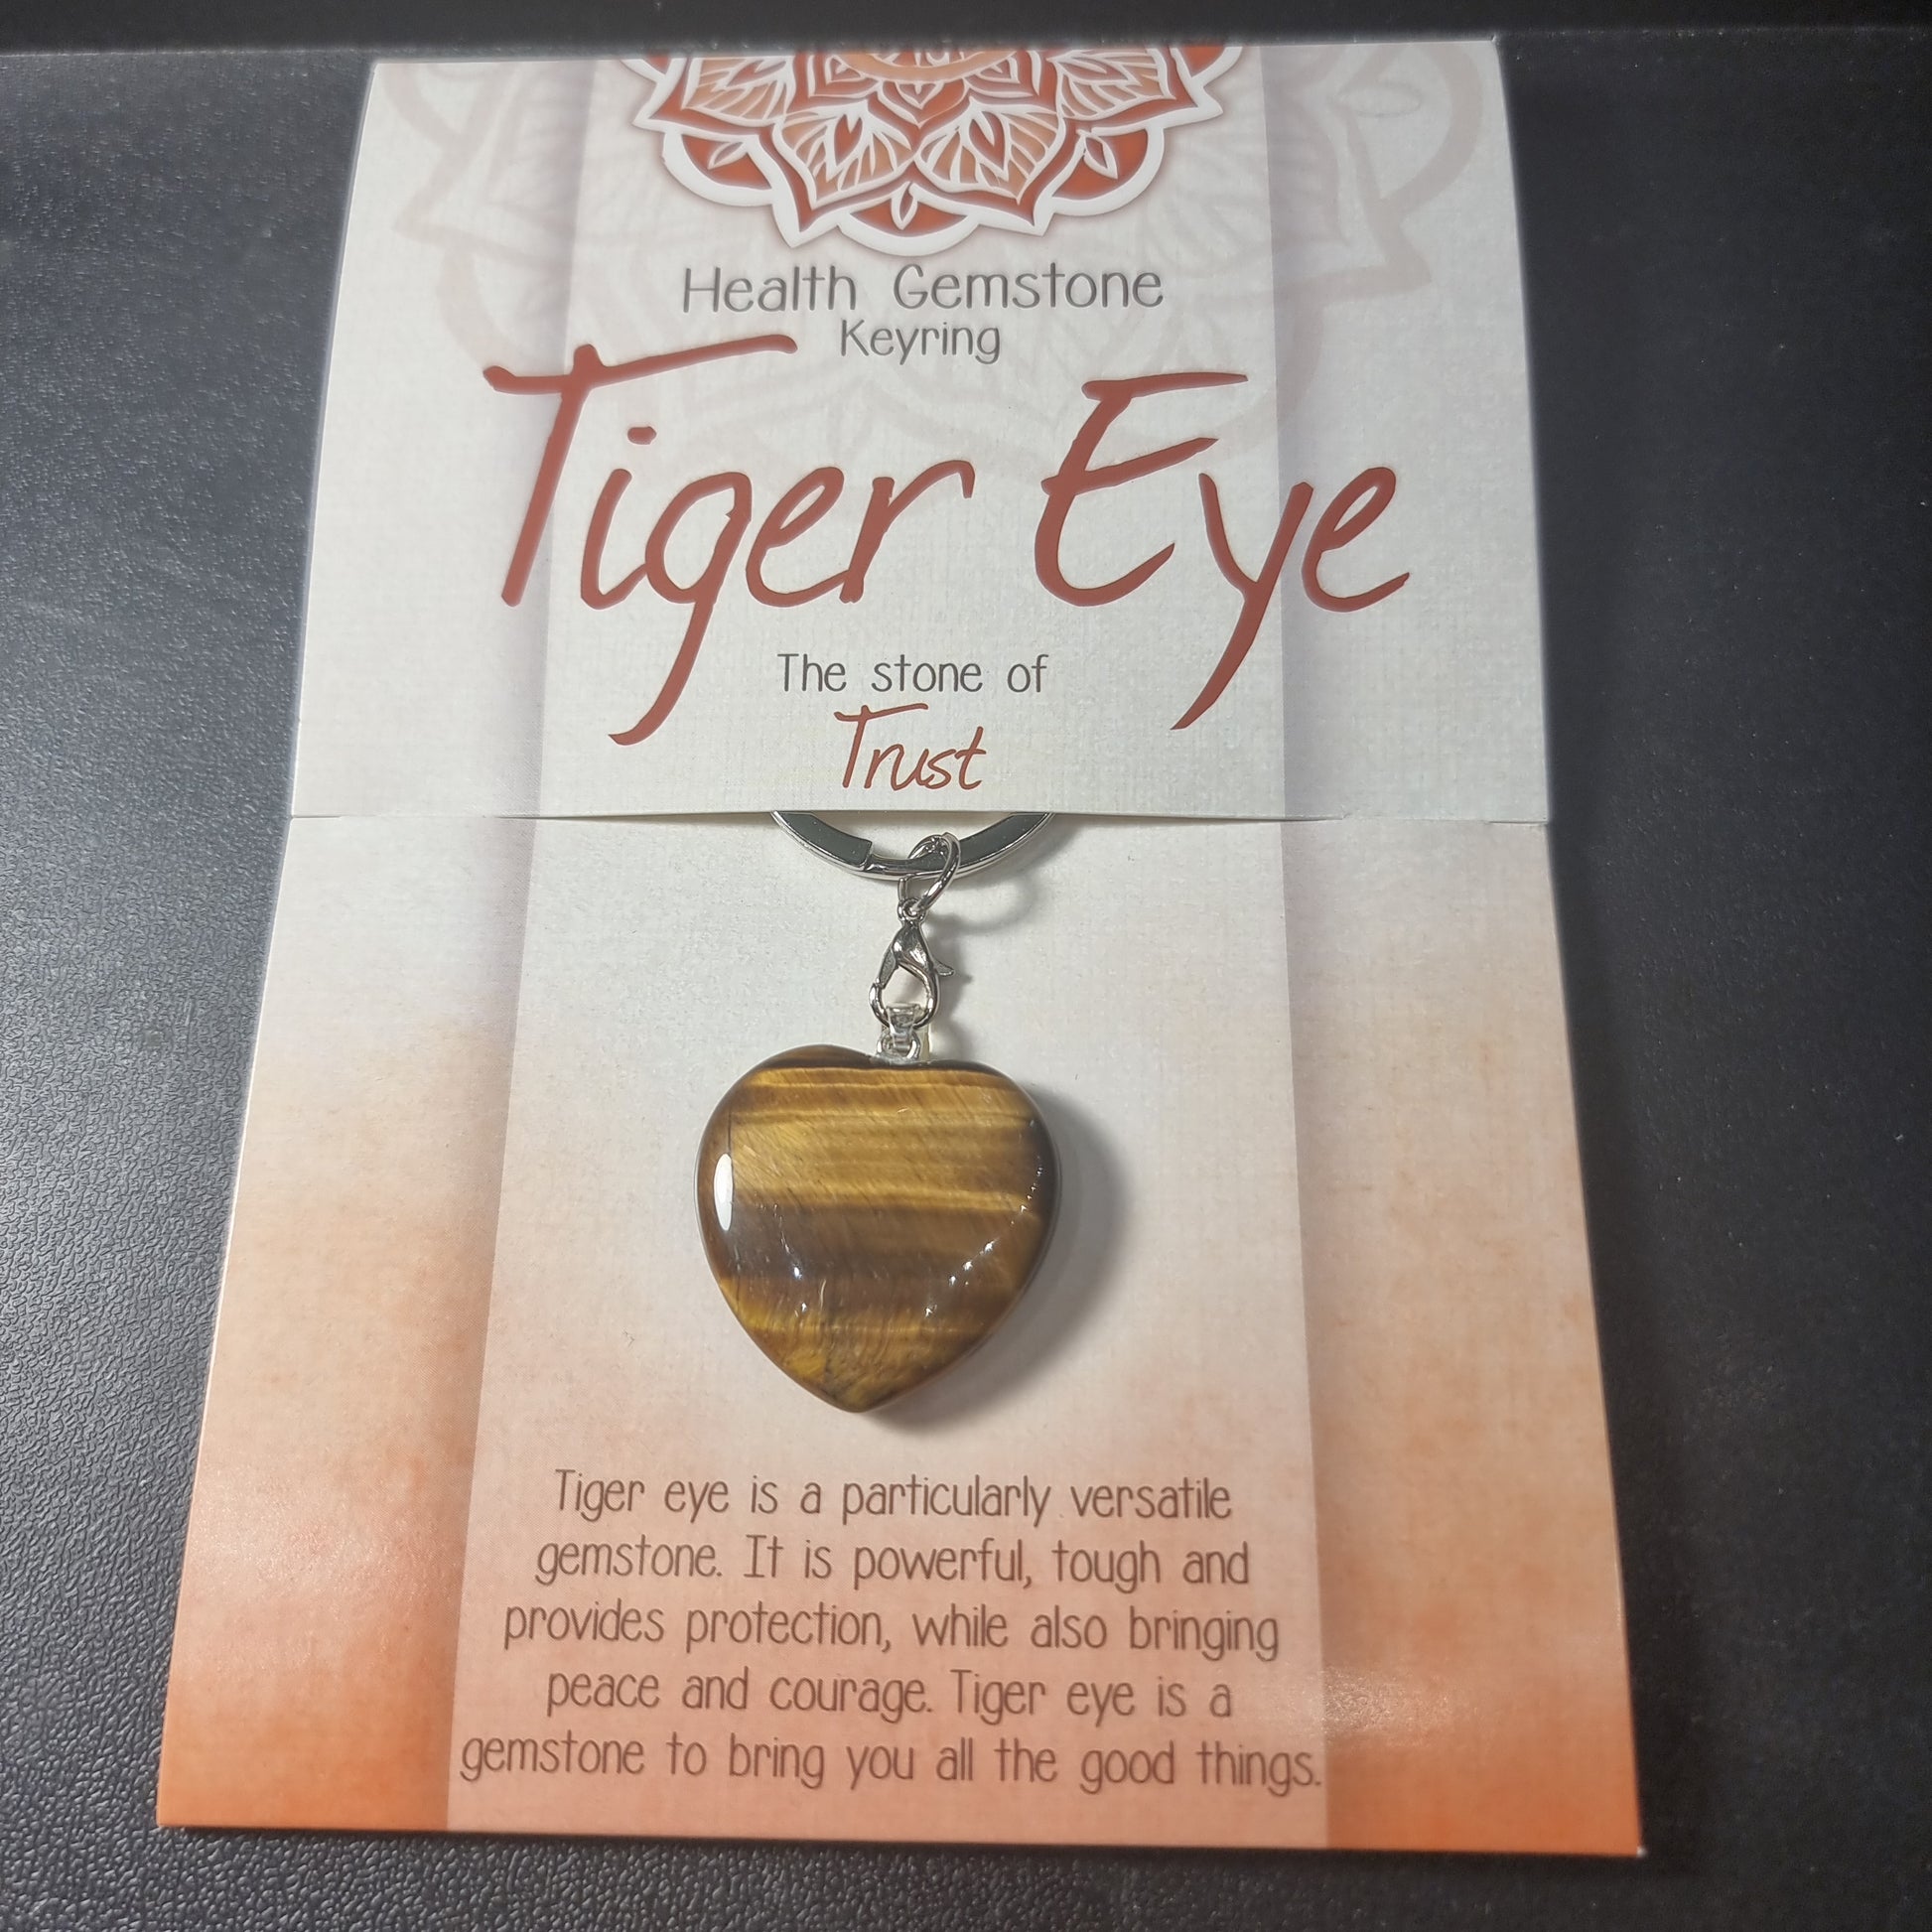 Tigers eye keyring (trust) - Rivendell Shop